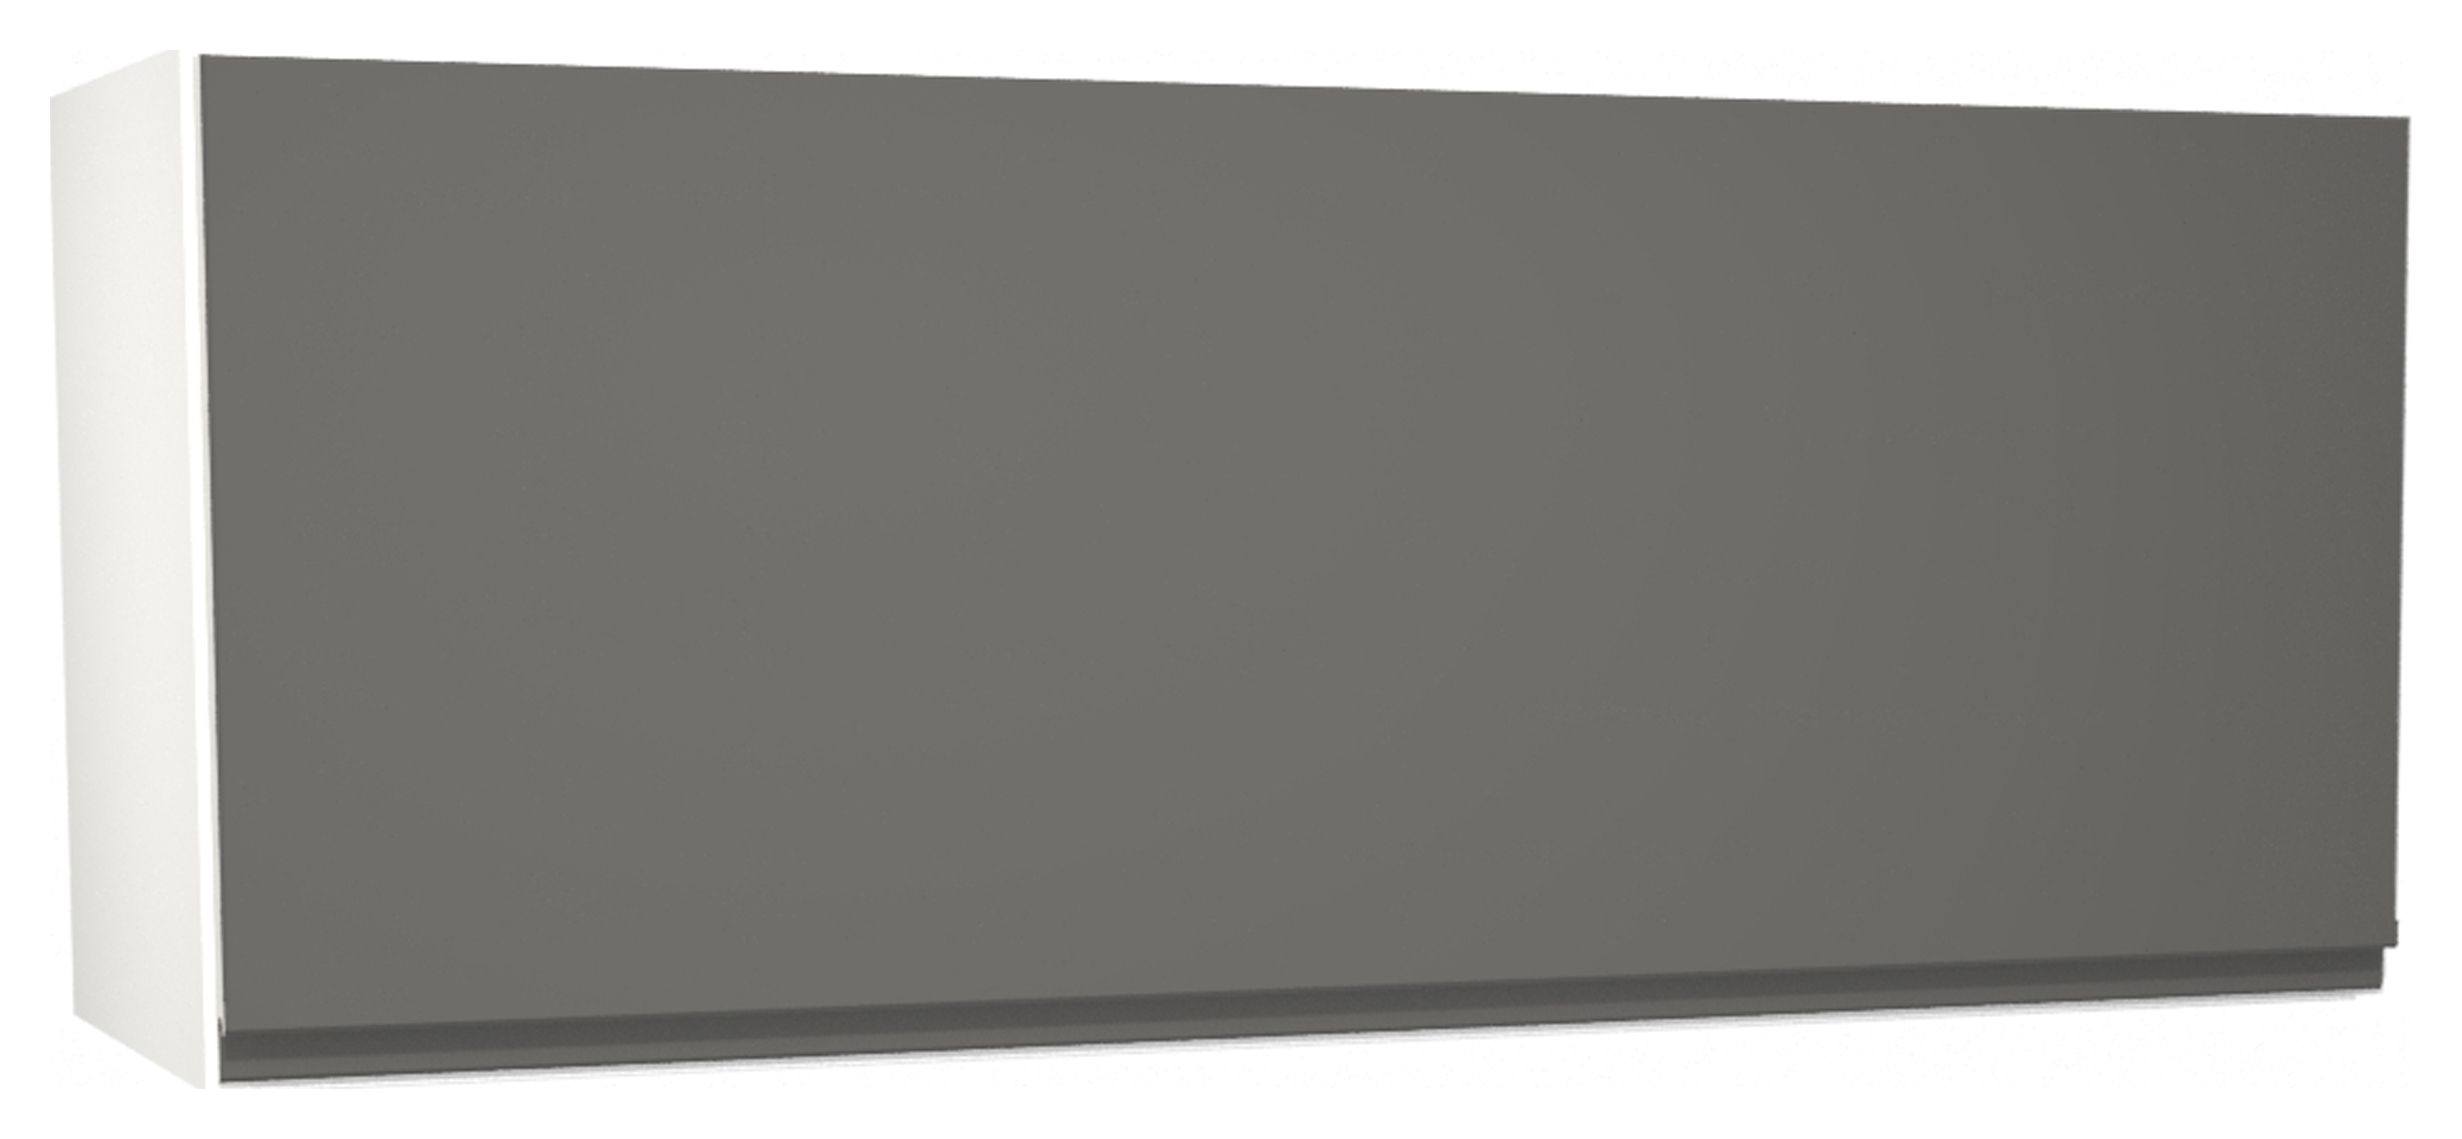 Image of Madison Dark Grey Gloss Handleless Narrow Wall Unit - 900mm